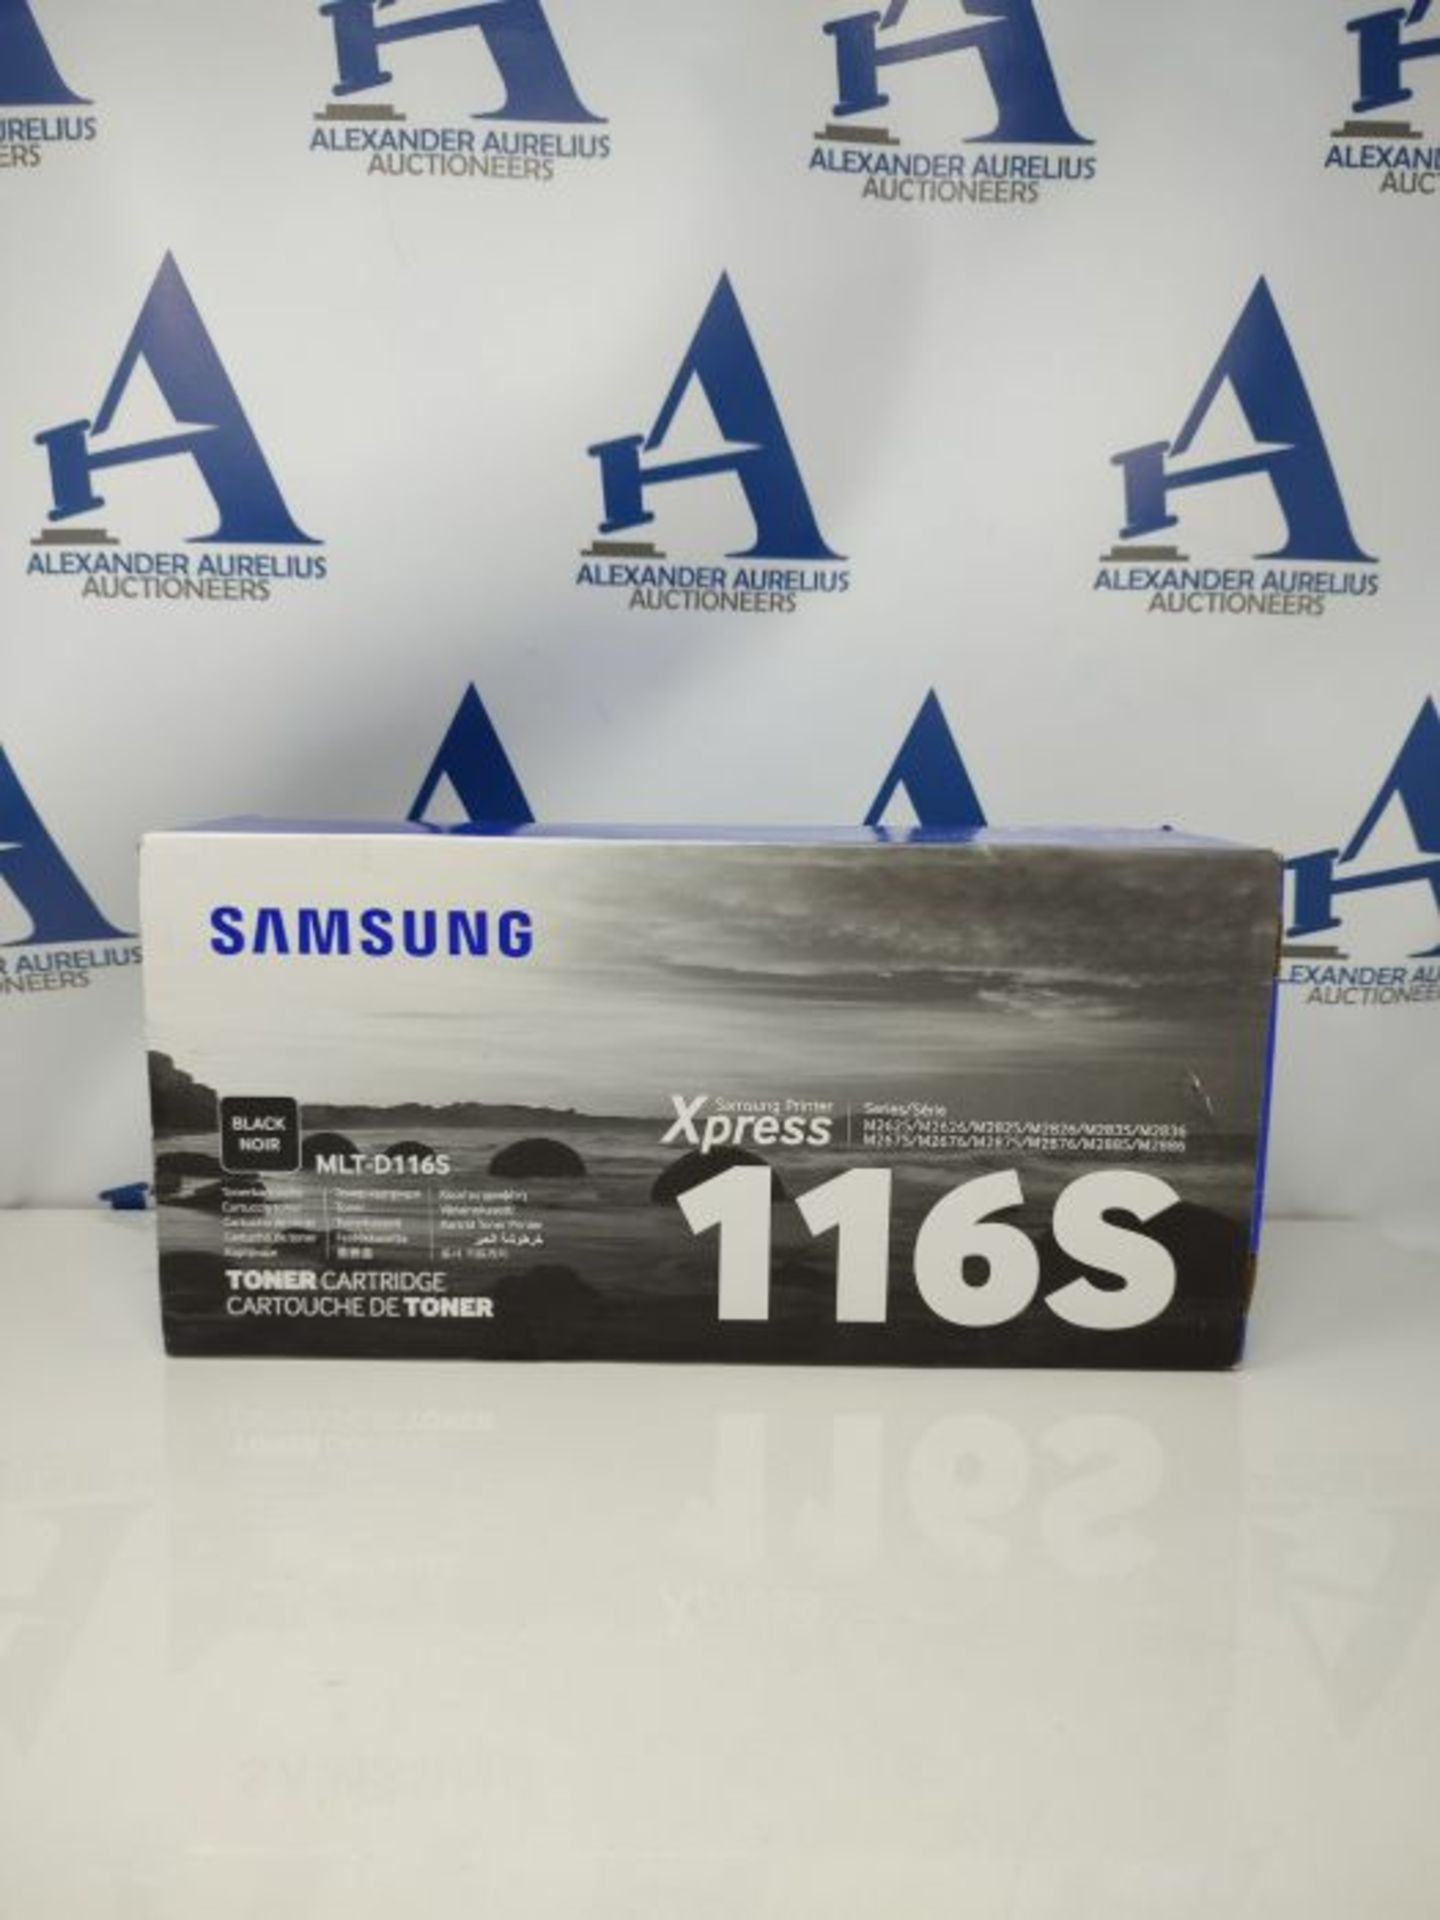 Samsung SU840A MLT-D116S Toner Cartridge, Black, Pack of 1 - Image 2 of 3